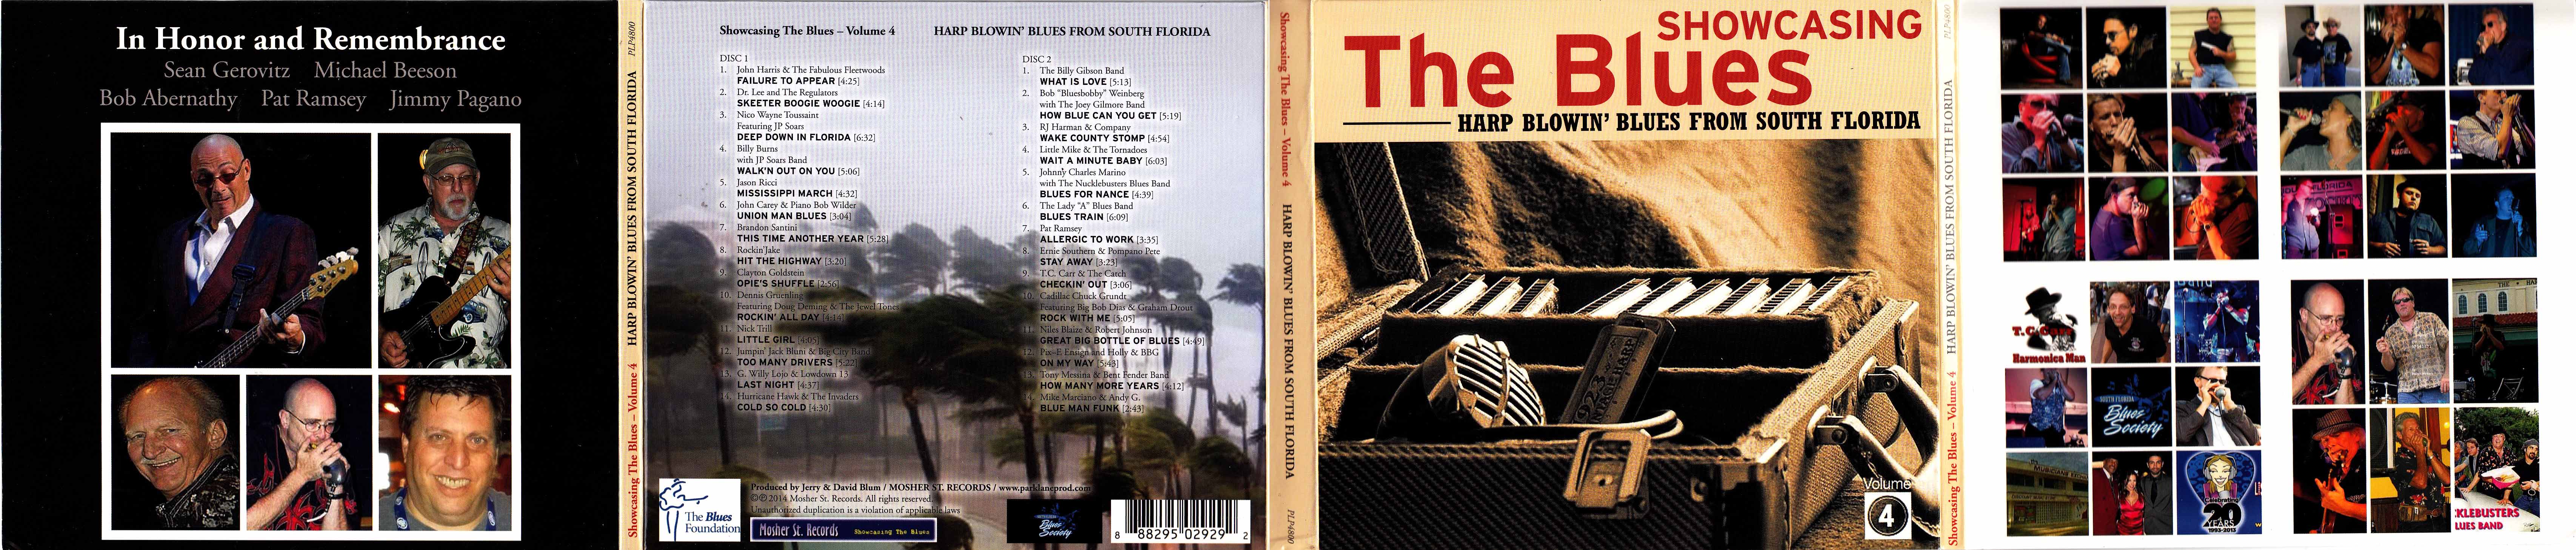 Showcasing The Blues - Volume 4 - CD2